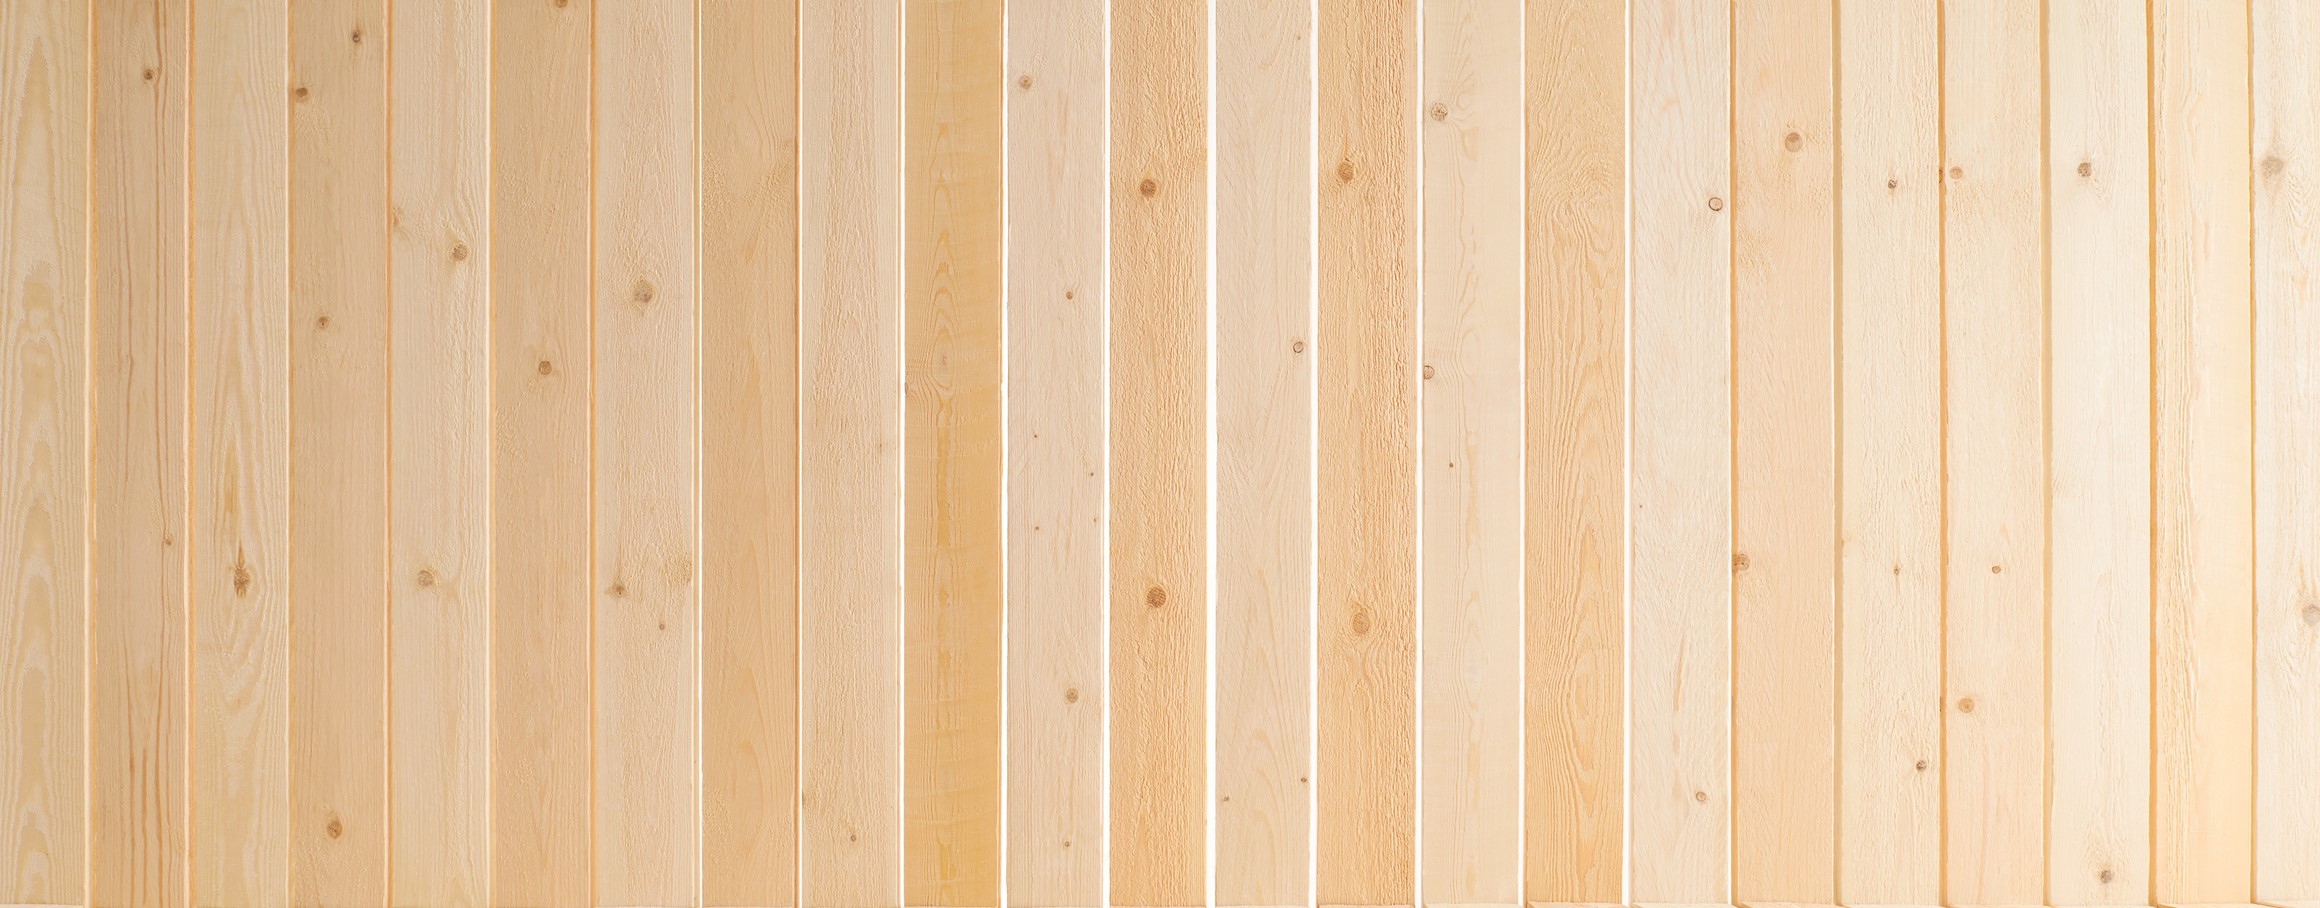 3.0.1 Sawn-timber.jpg